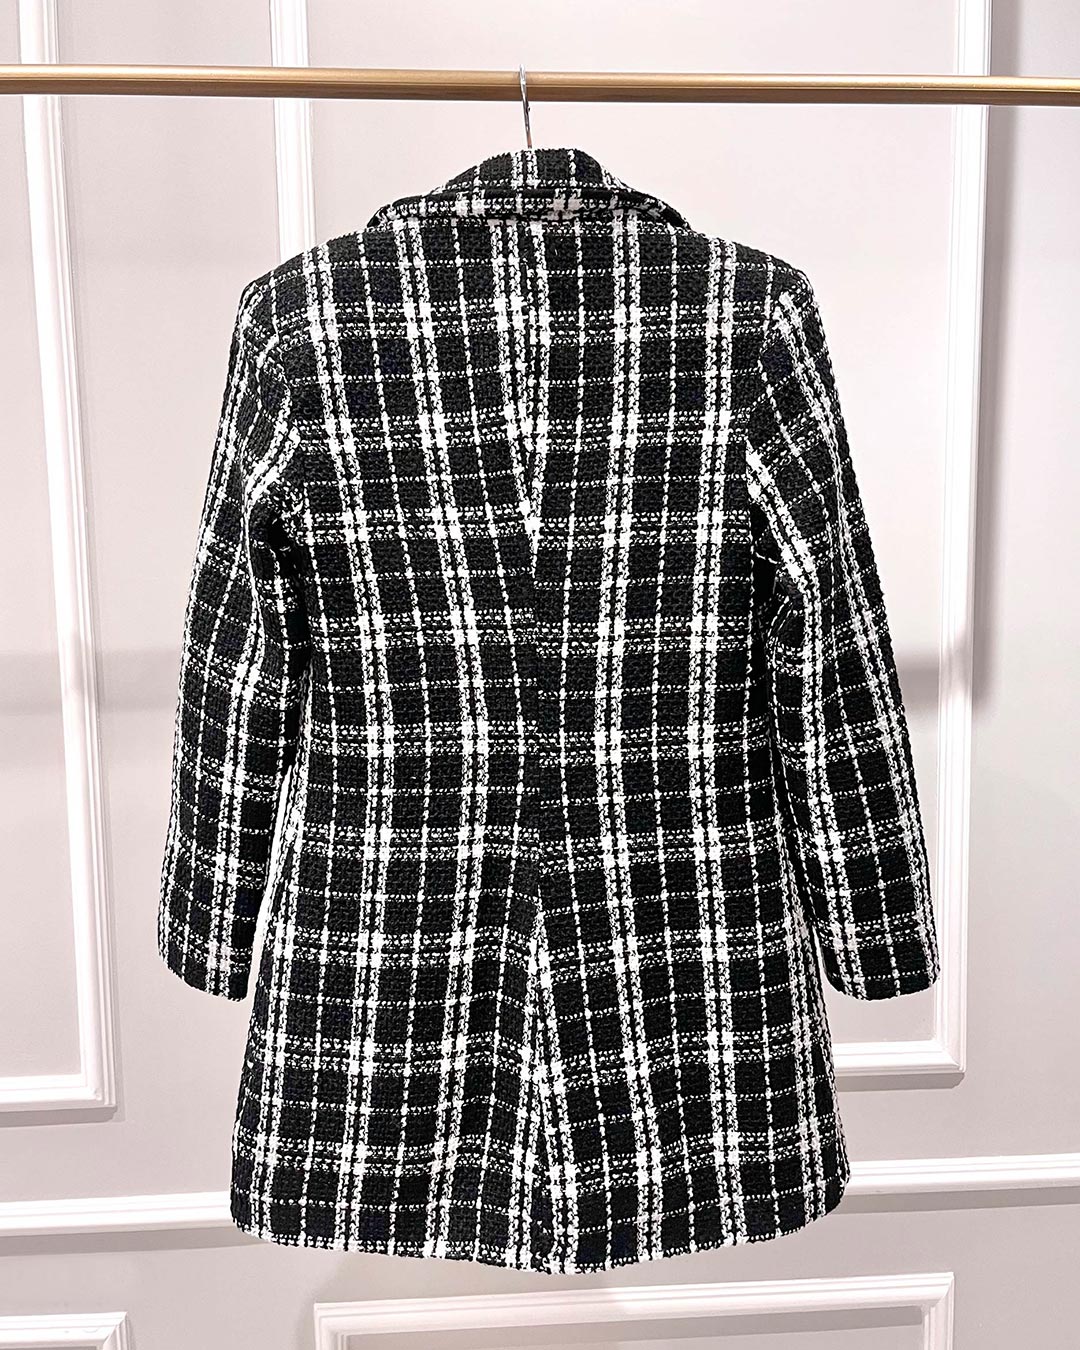 Dot Clothing - Blazer Dot Clothing Black Tweed - 1962PRETO